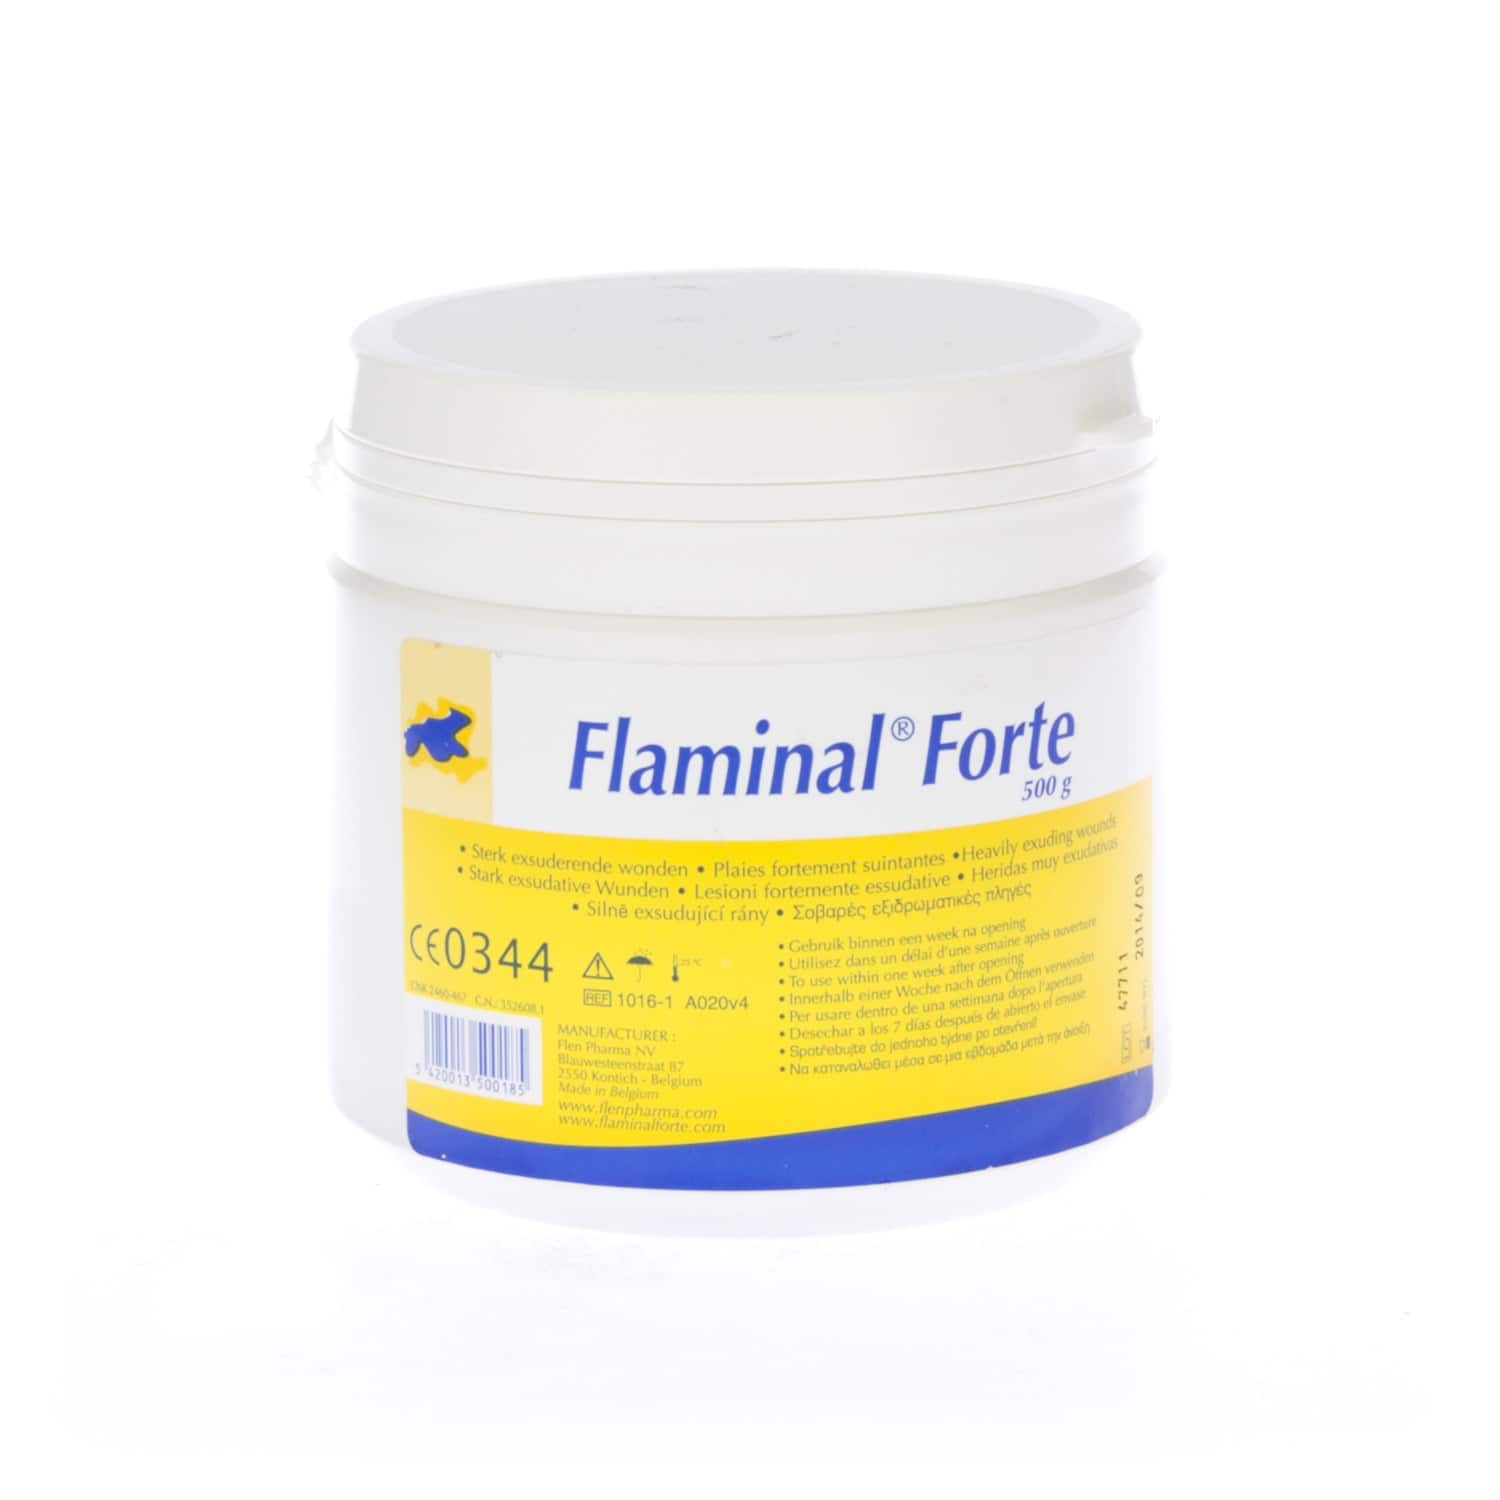 Flaminal Forte